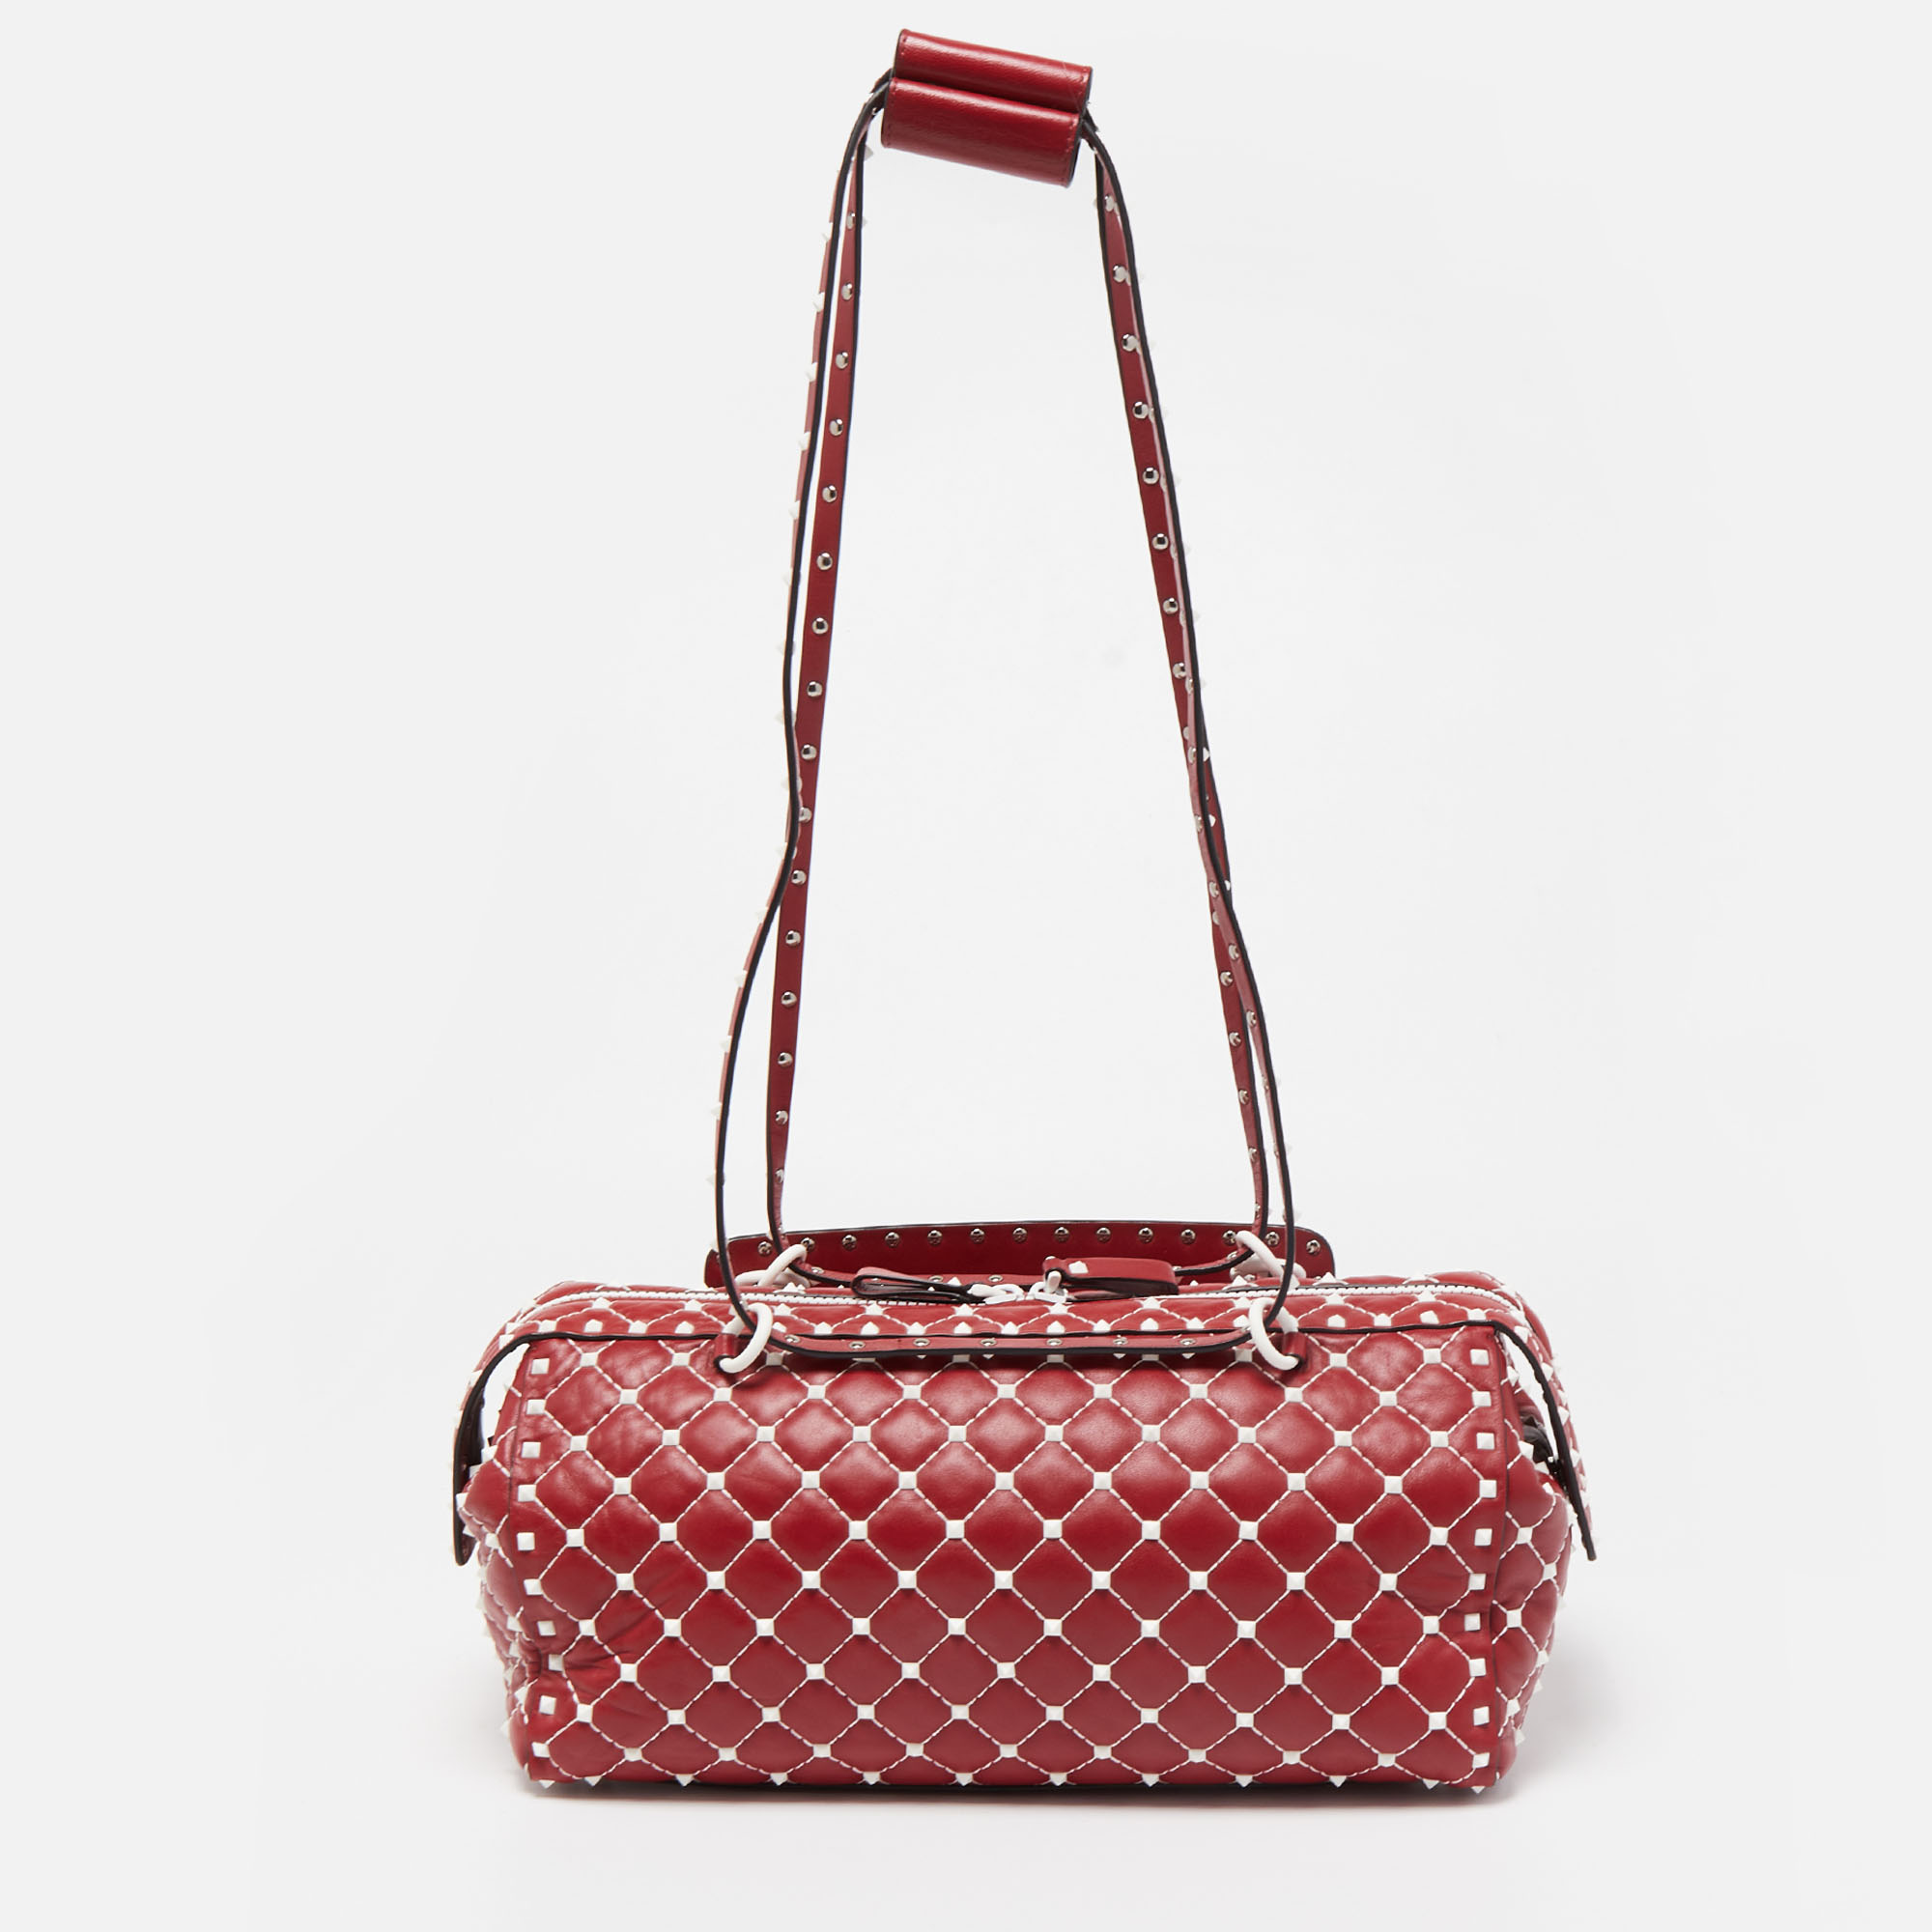 Valentino Red Leather Rockstud Spike Duffel Bag